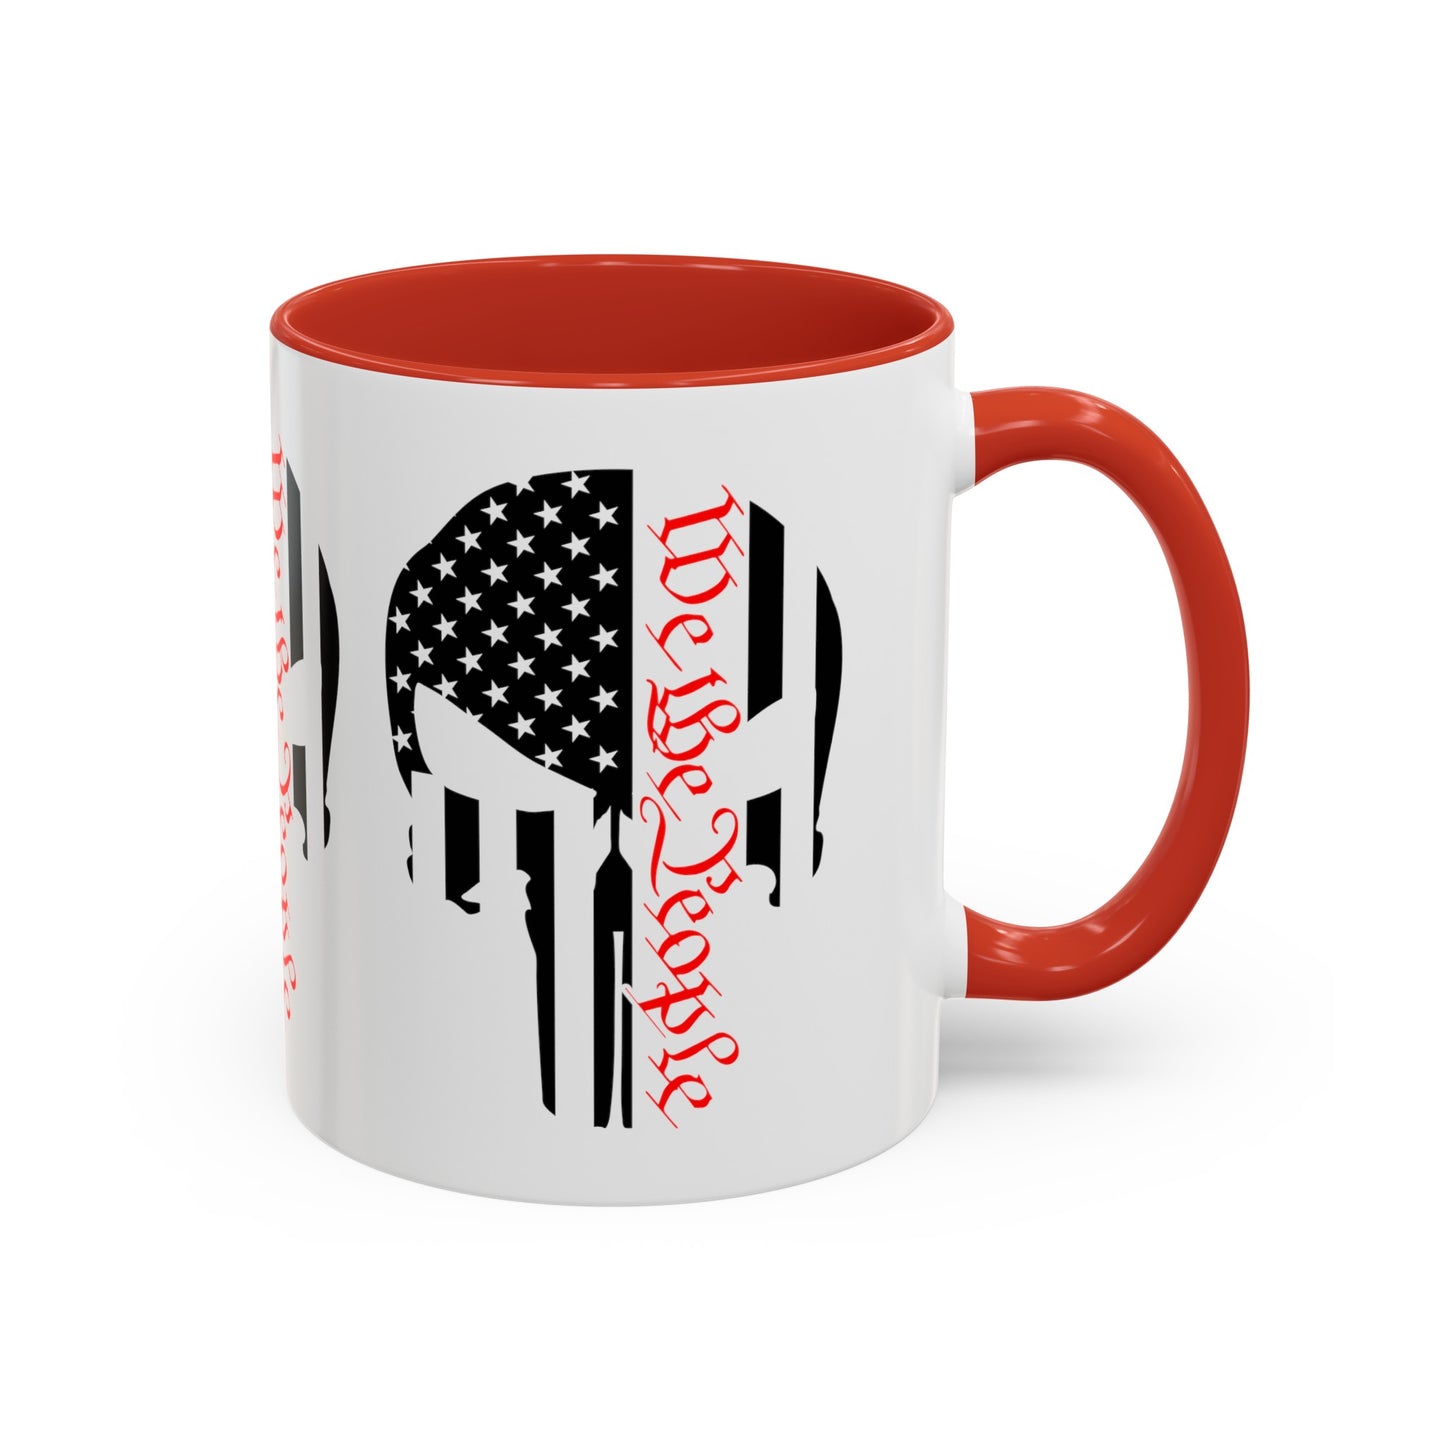 Enjoy sipping your favorite beverage from this iconic We The People Punisher Skull Logo mug. Shop SmithRidge.farm for #SpiritOfAmerica merchandise.